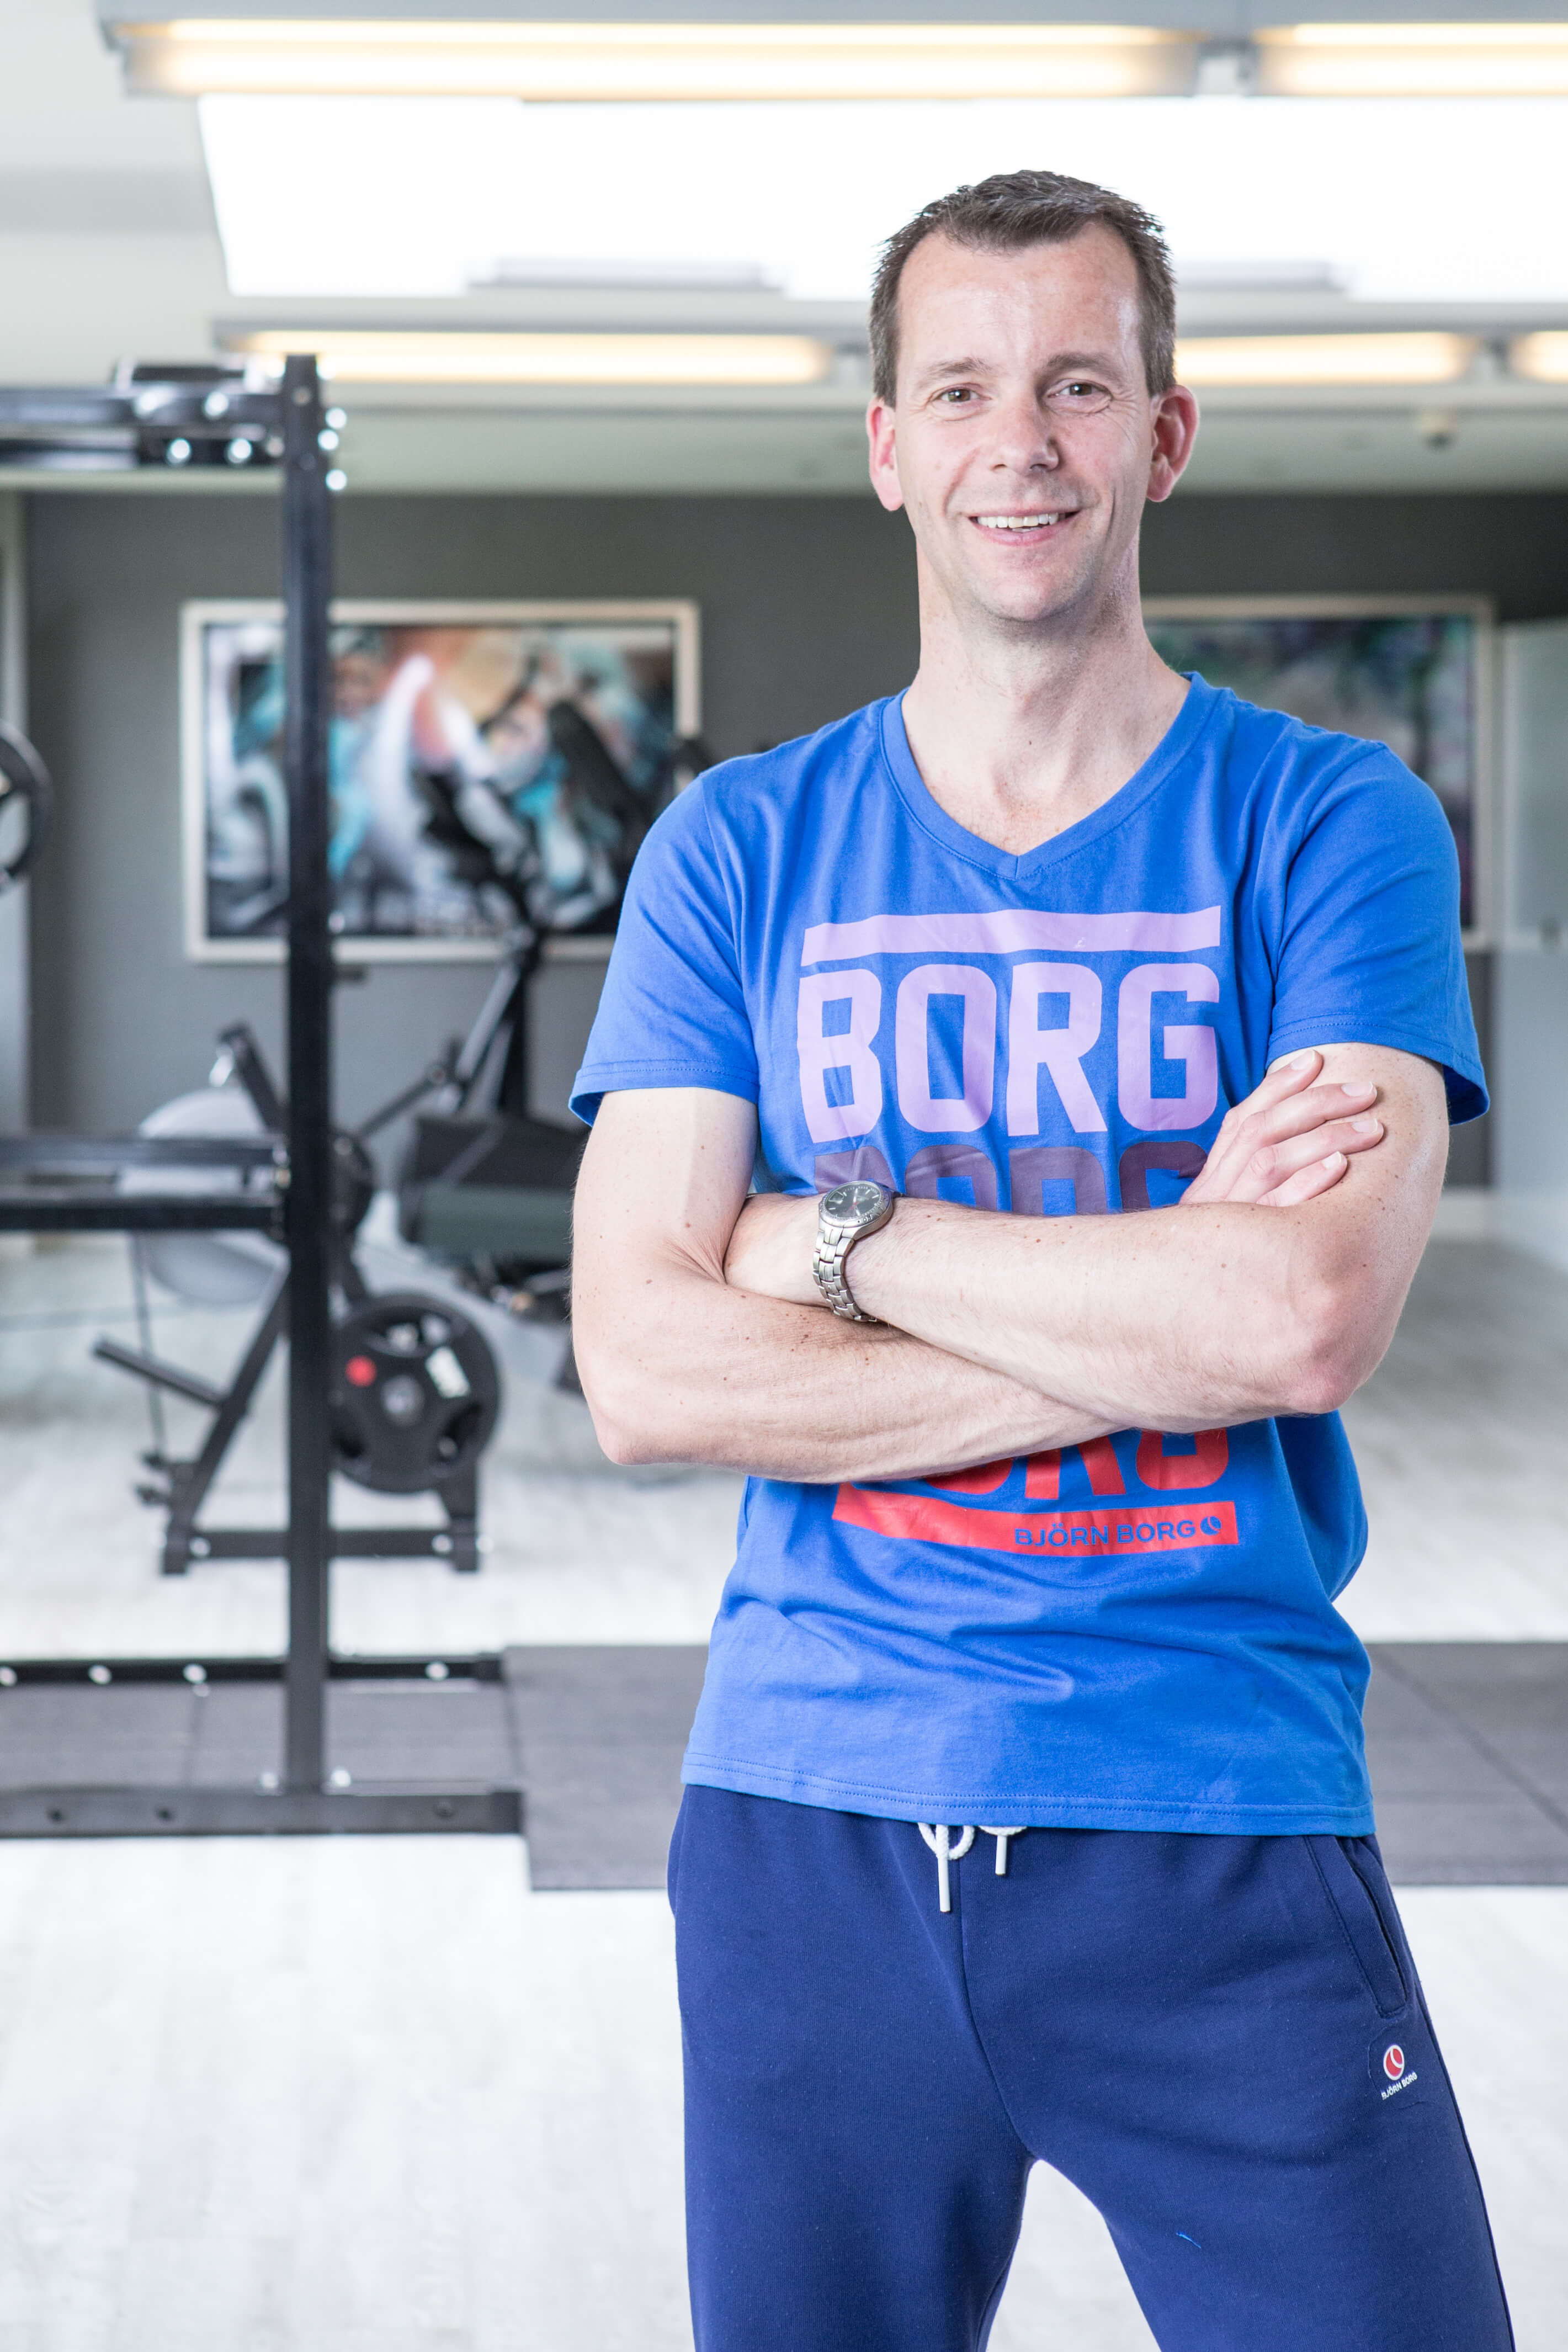 Personal Trainer Rotterdam - Motifaith Personal Training & Coaching